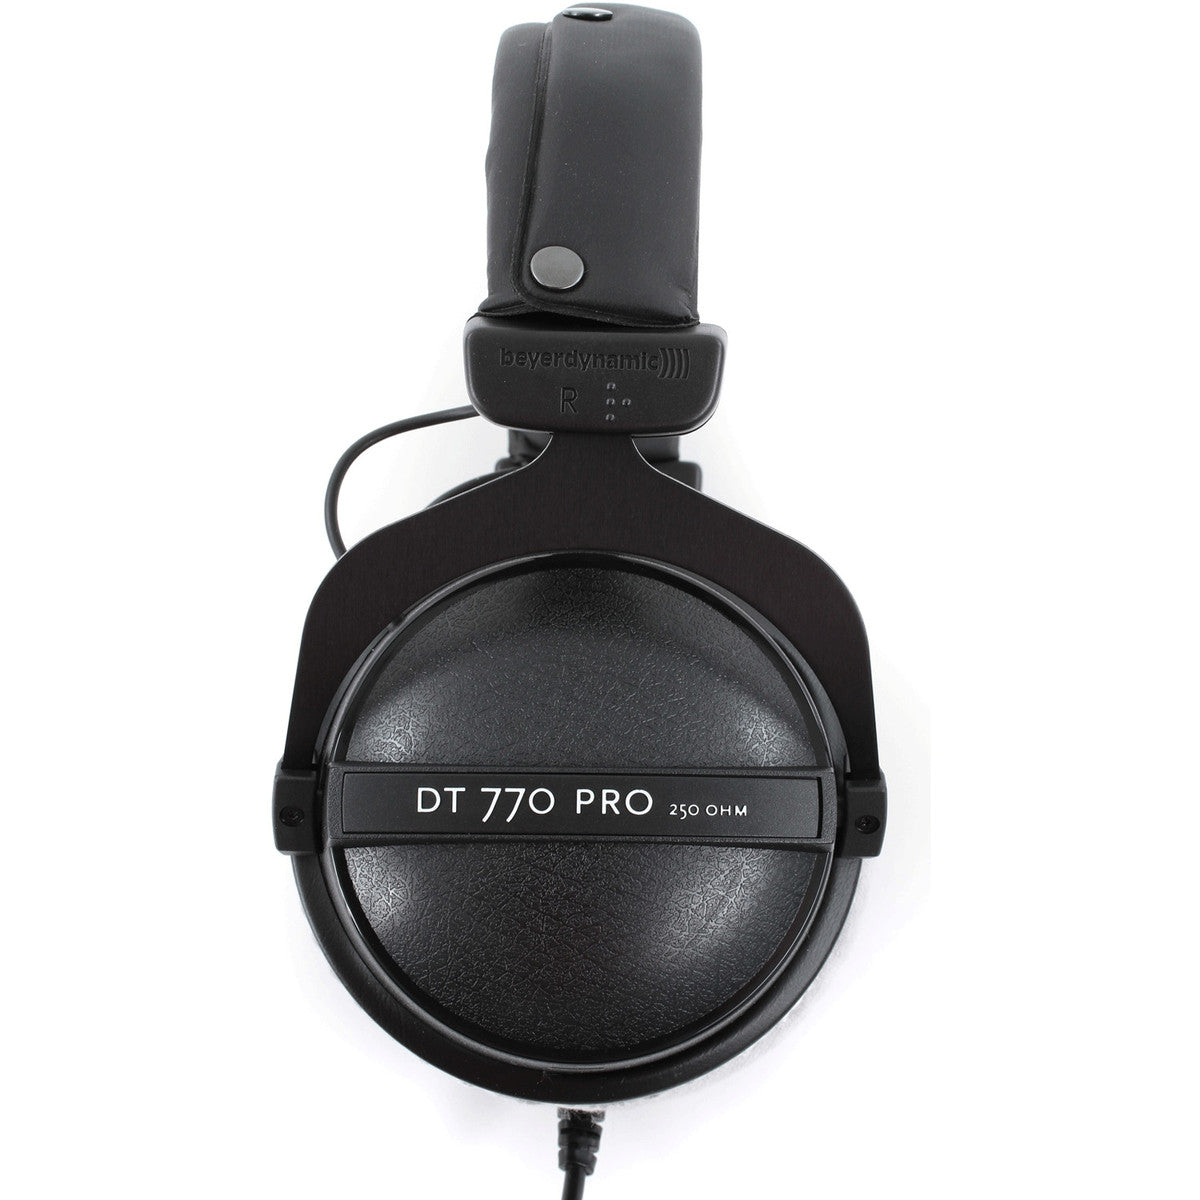 Beyerdynamic DT 770 Pro 250 ohm Studio Headphones